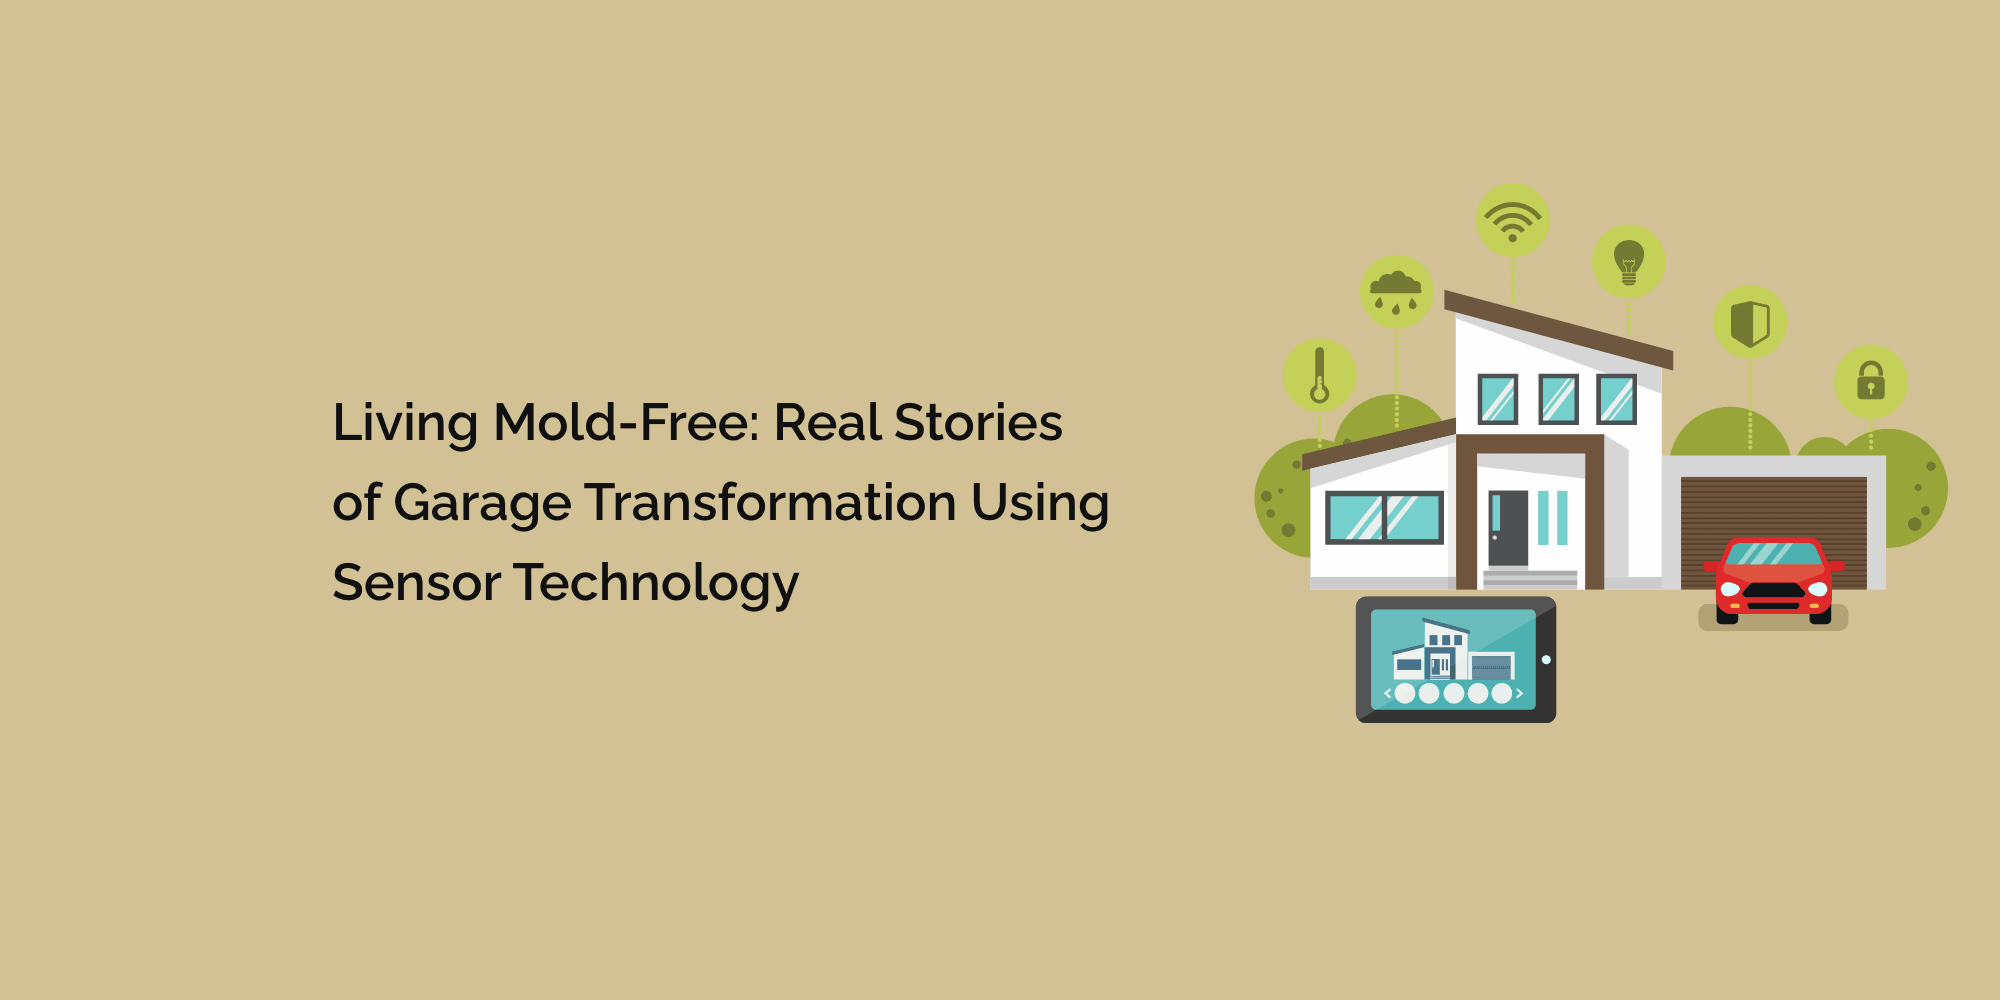 Living Mold-Free: Real Stories of Garage Transformation Using Sensor Technology